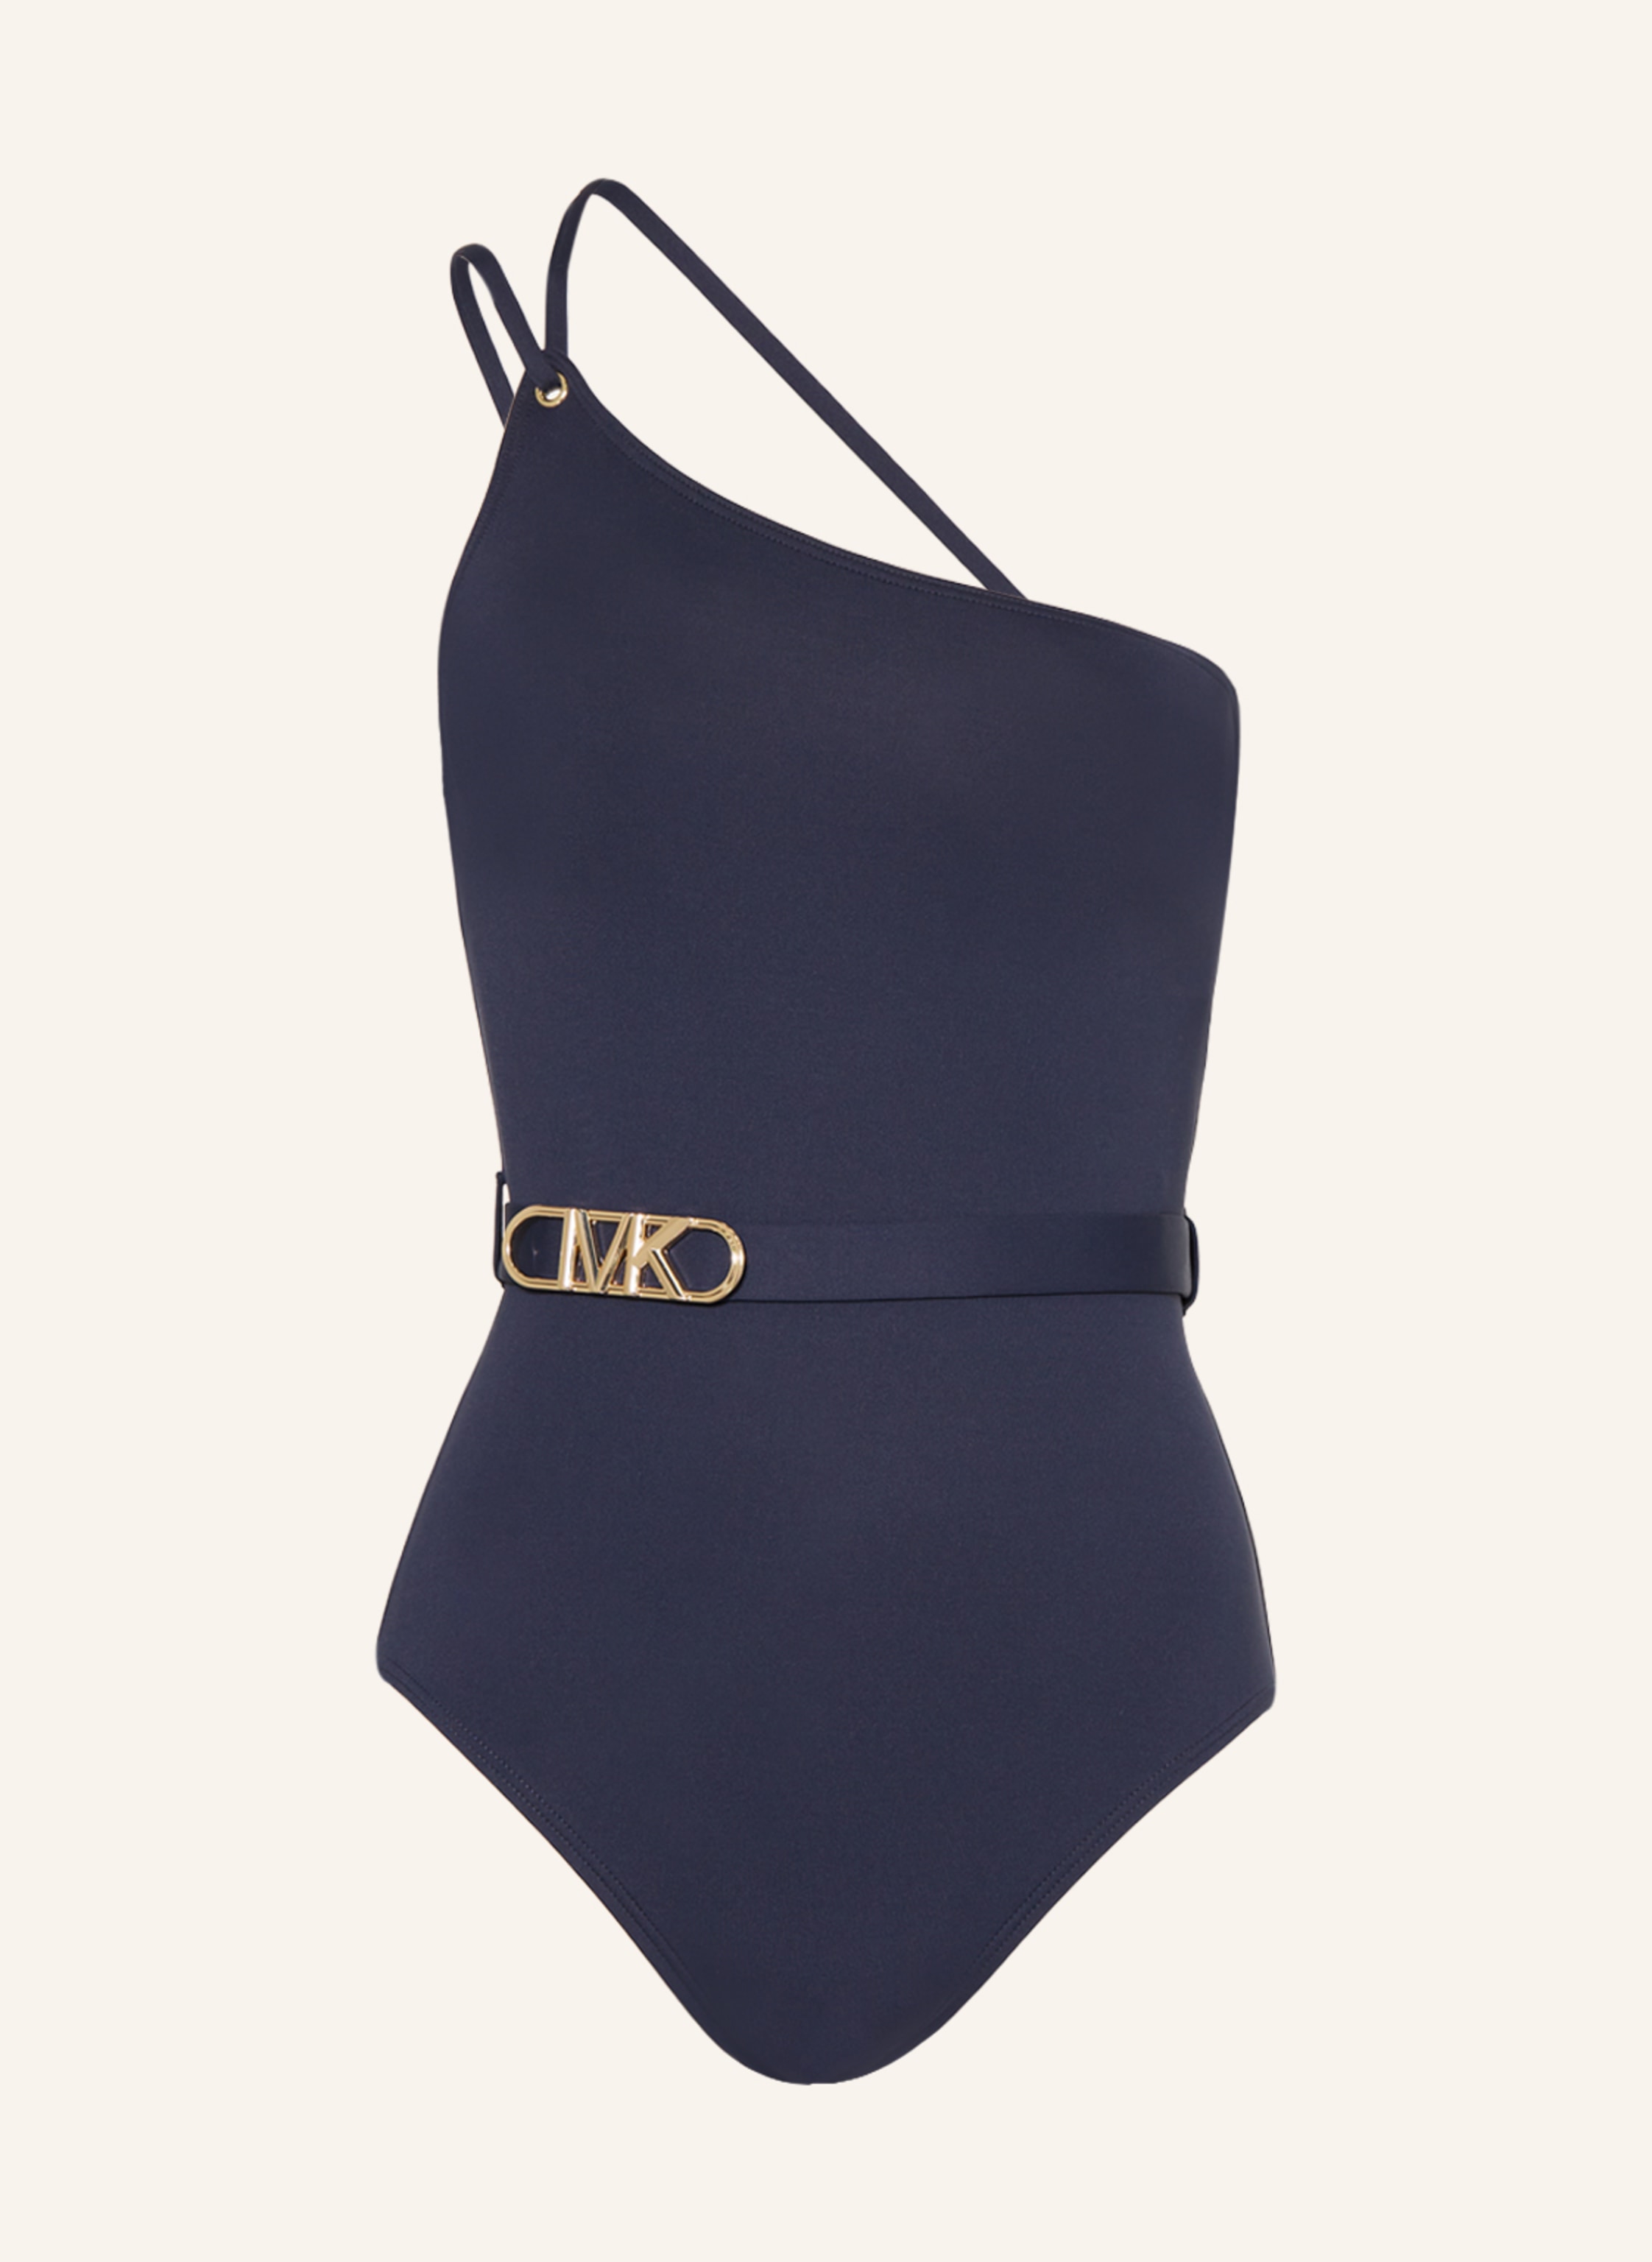 MICHAEL KORS One-shoulder swimsuit SOLIDS in dark blue | Breuninger